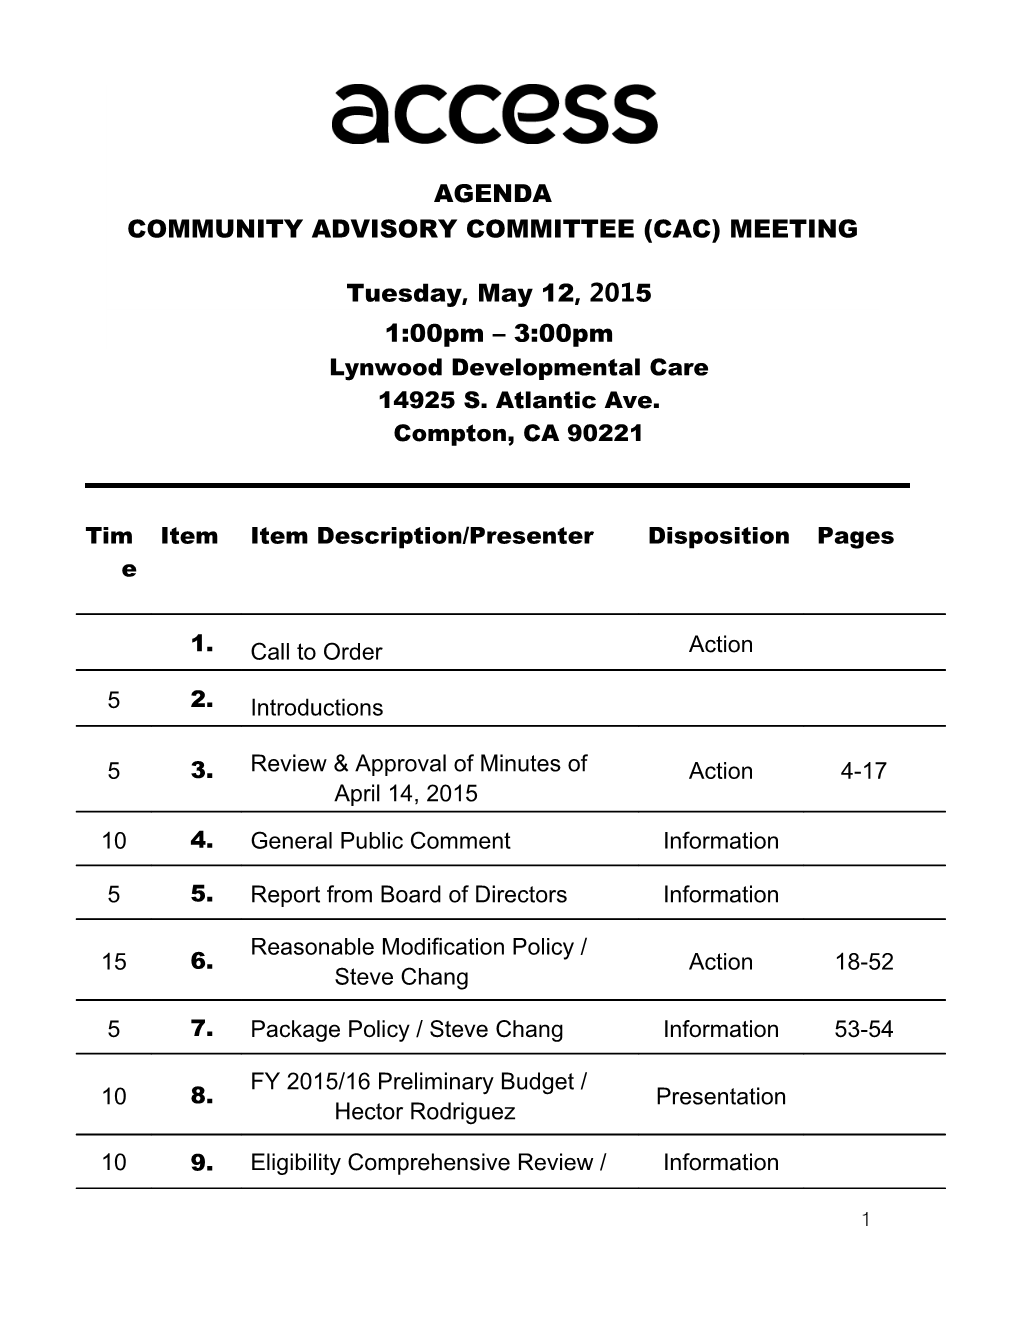 Community Advisory Committee (Cac) Meeting s1